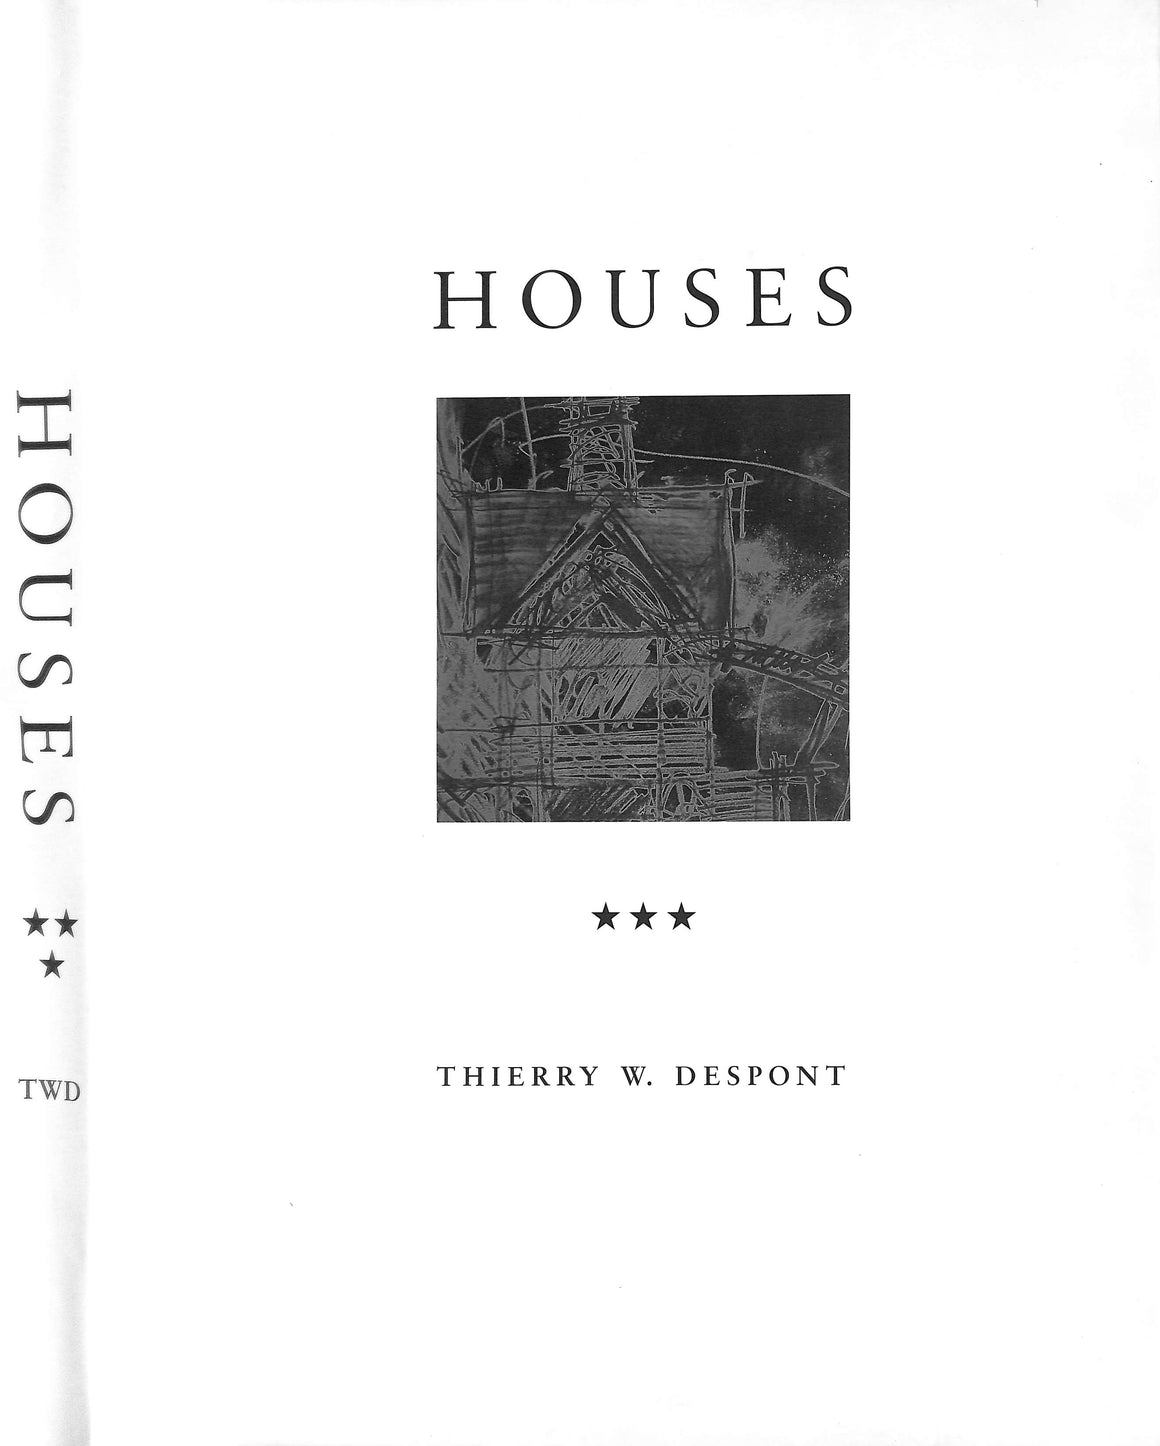 "Houses ***" 2000 DESPONT, Thierry W.